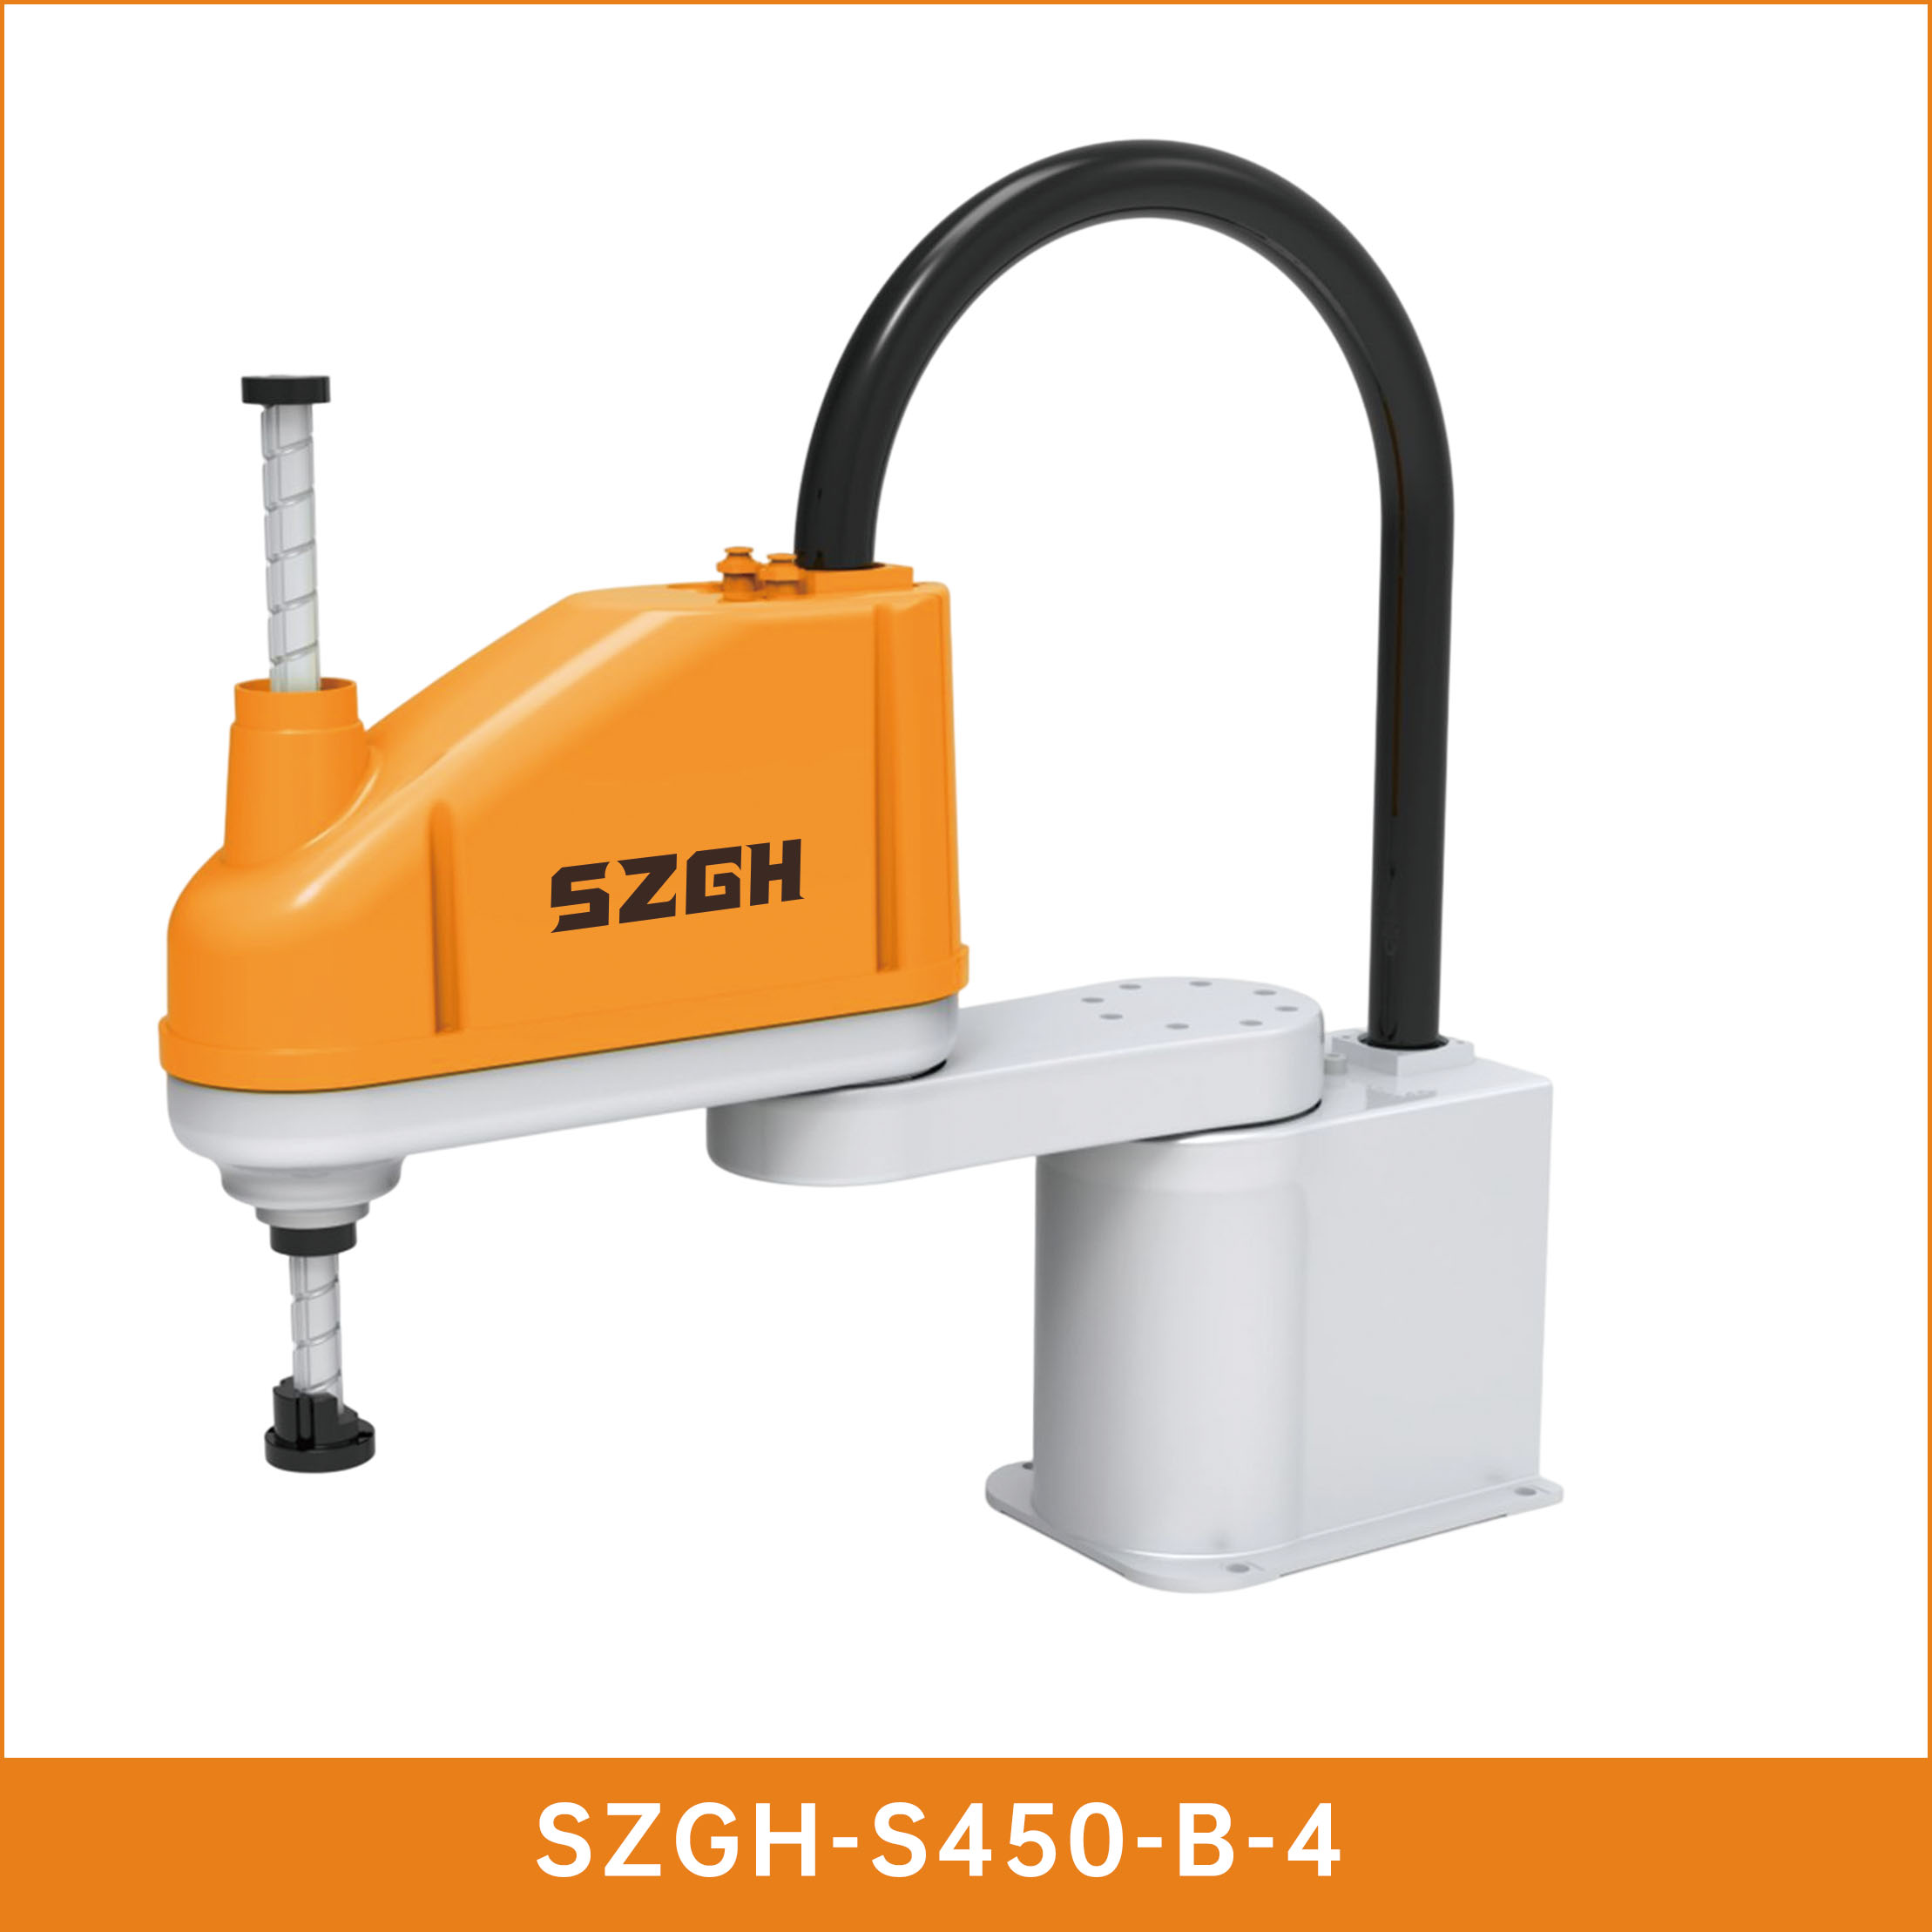 SZGH-S450-B-4 